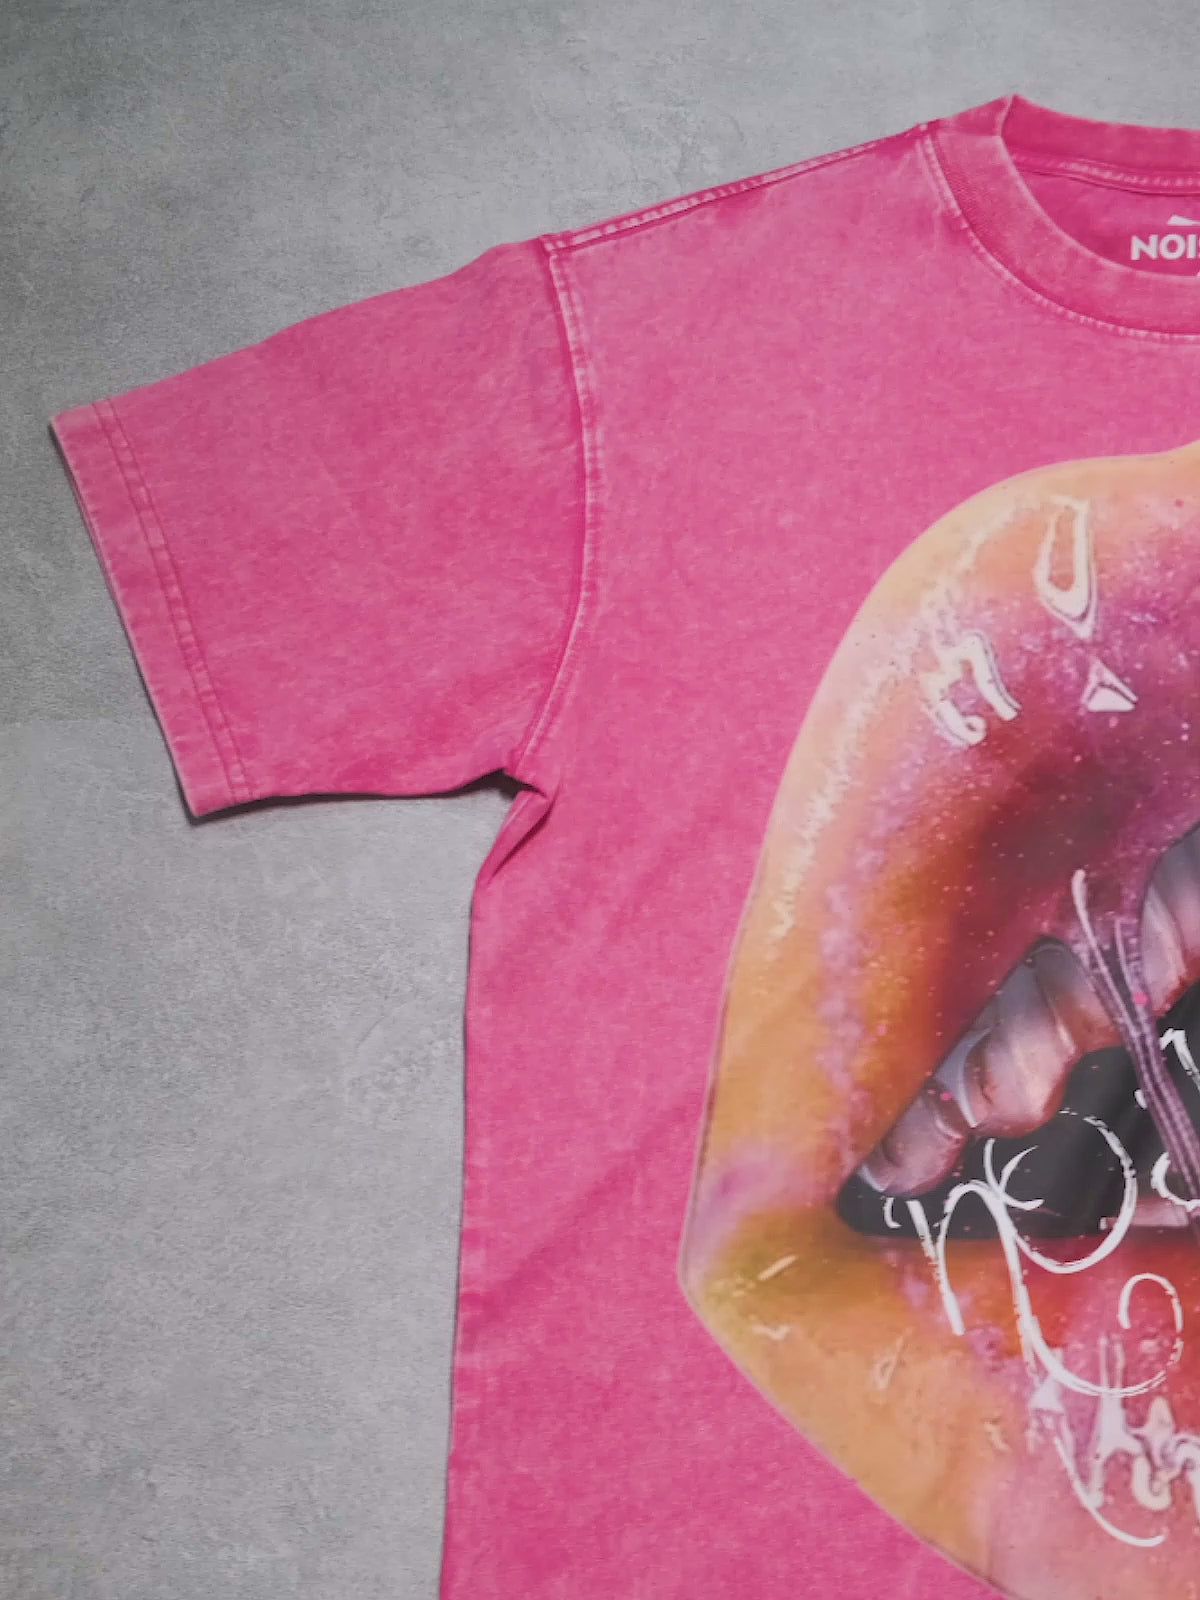 BOUNCE BACK© Lip & Teeth Print Pink T-shirt